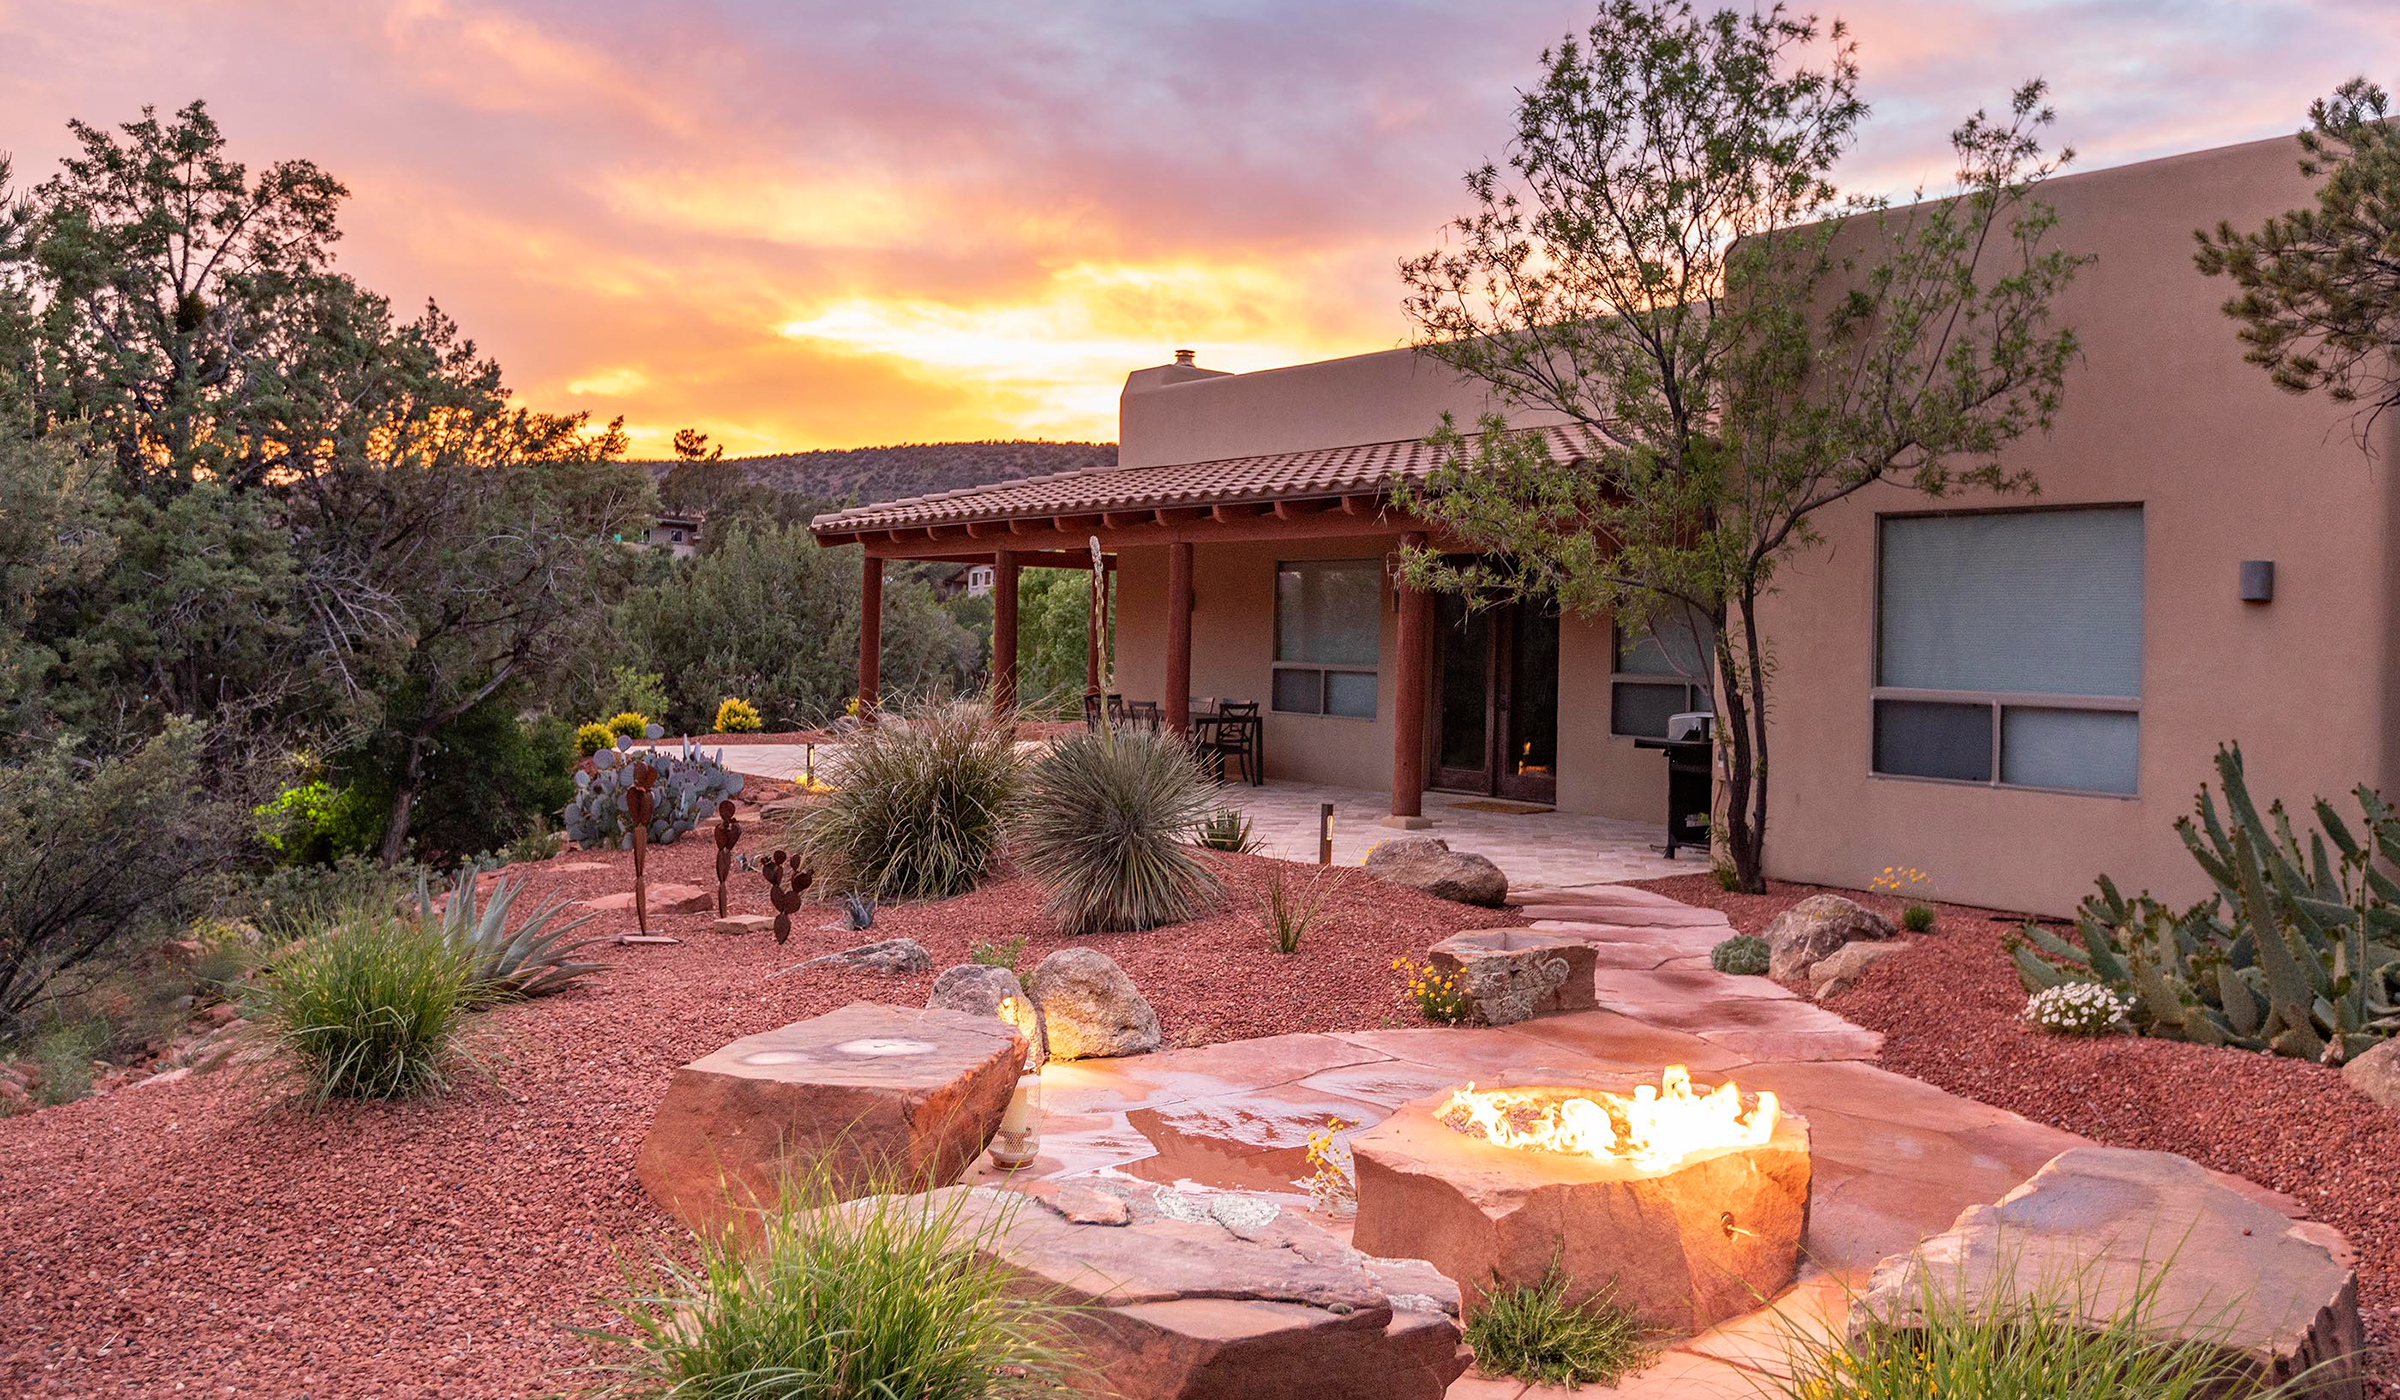 Landscape Design with Flagstone Patio and Fire-pIt Sedona Arizona